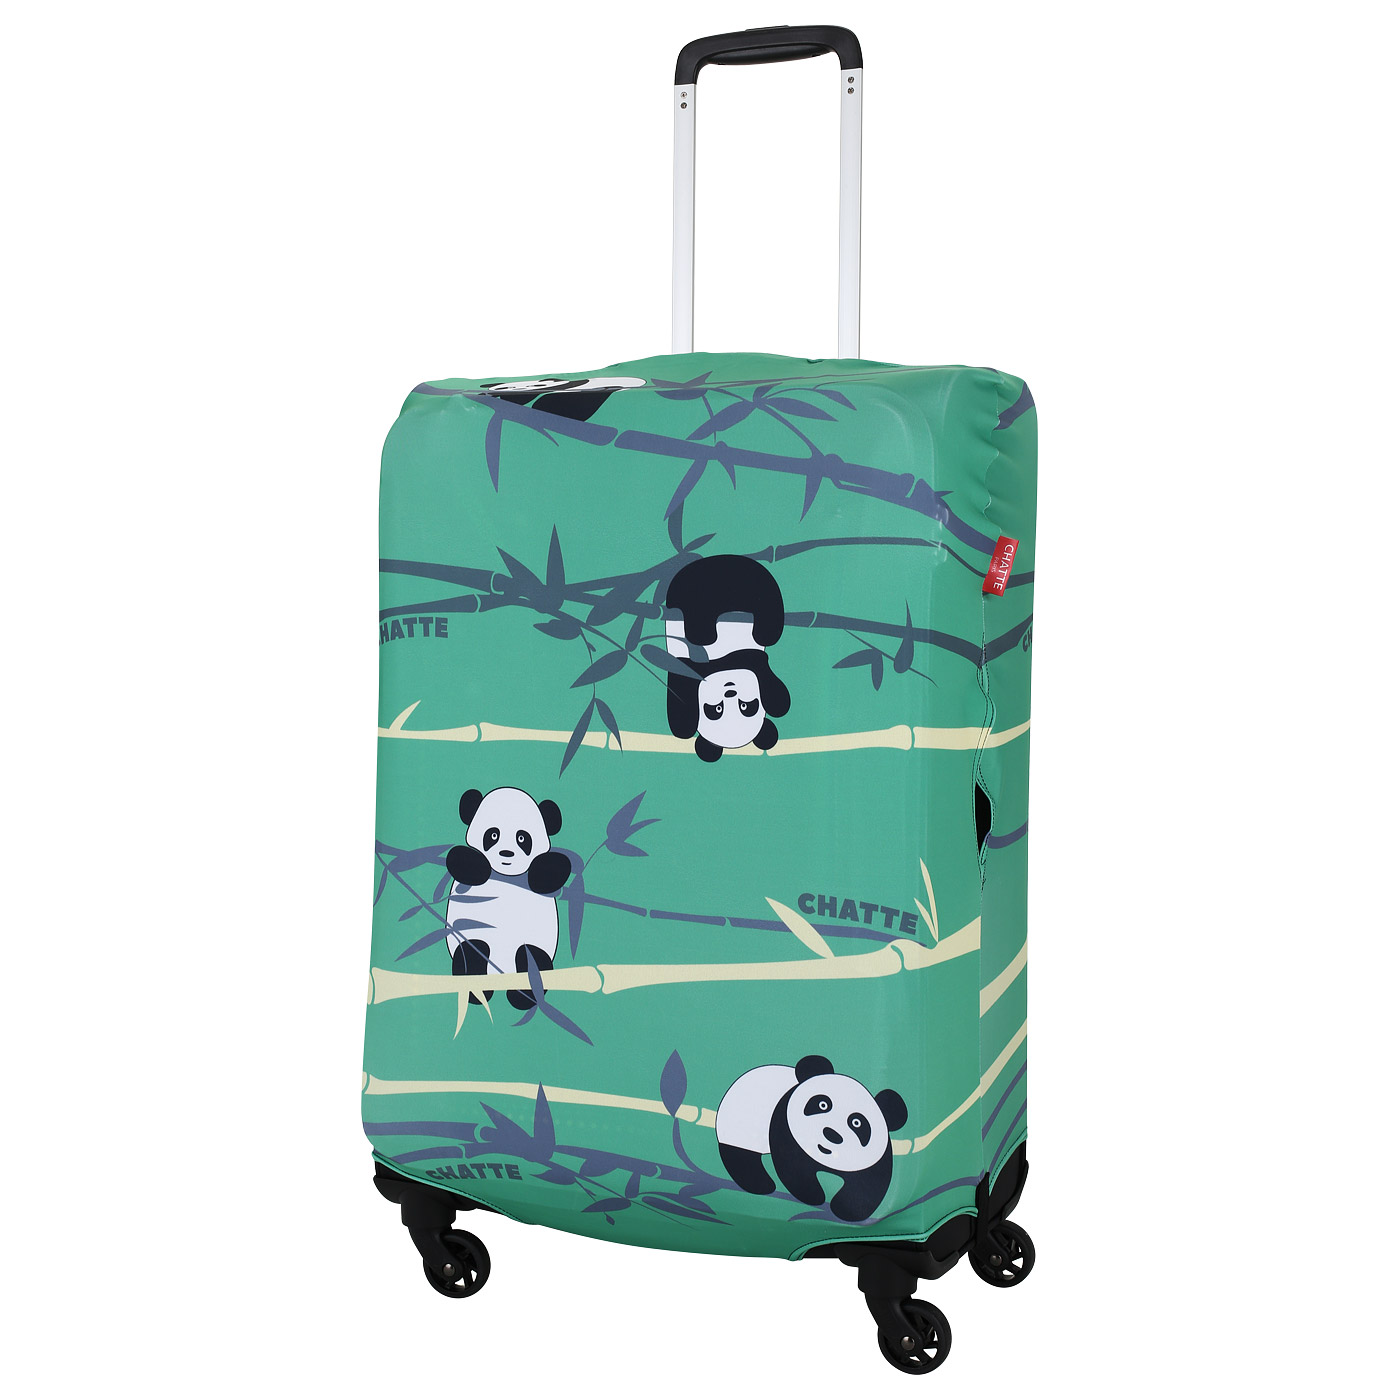 Чехол для чемодана Chatte Panda Party